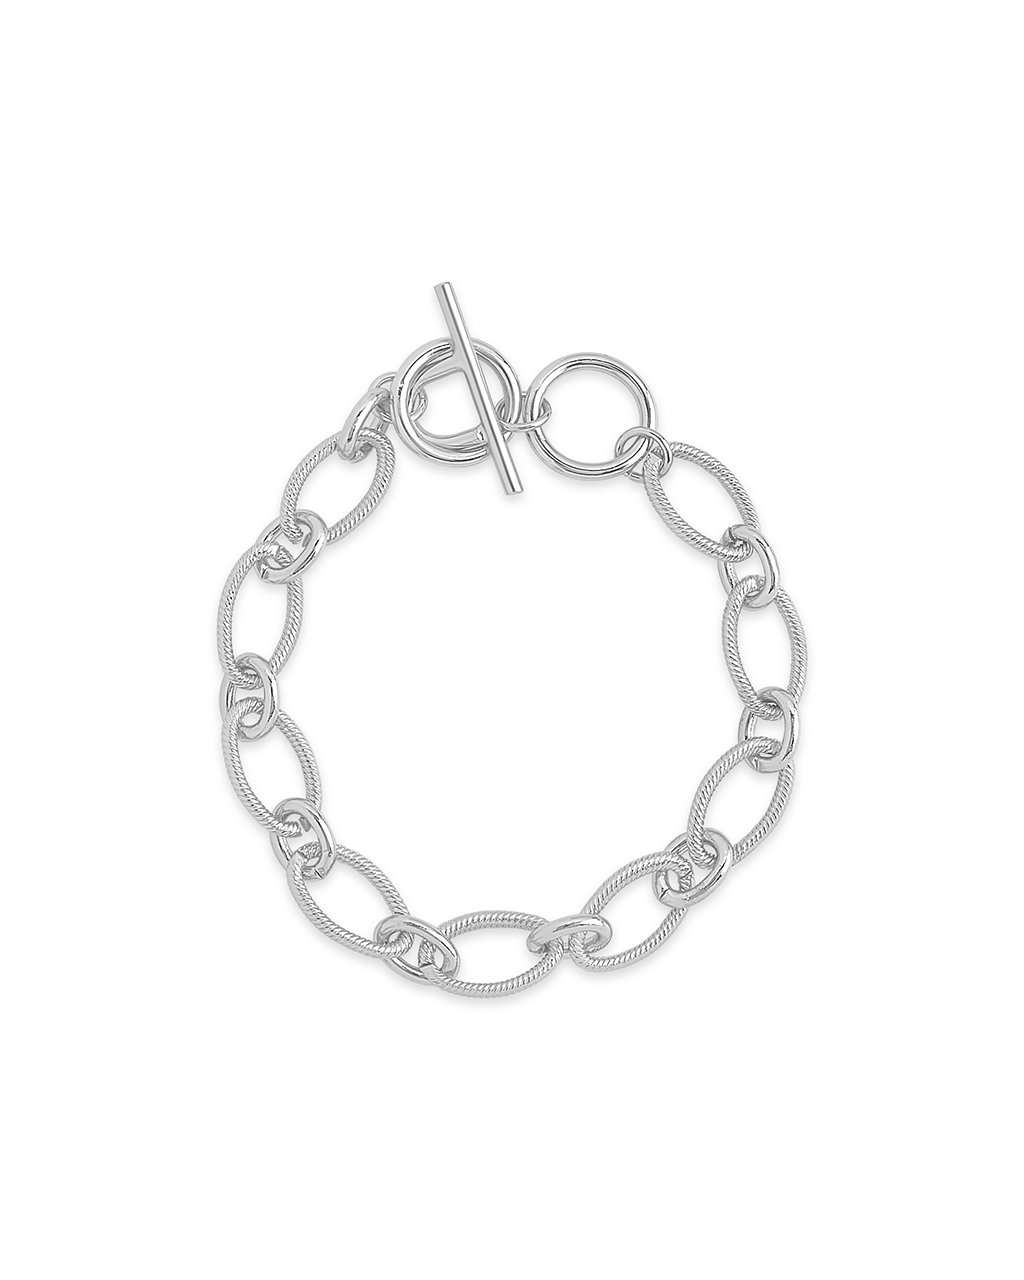 Chain Linked Toggle Bracelet - Sterling Forever